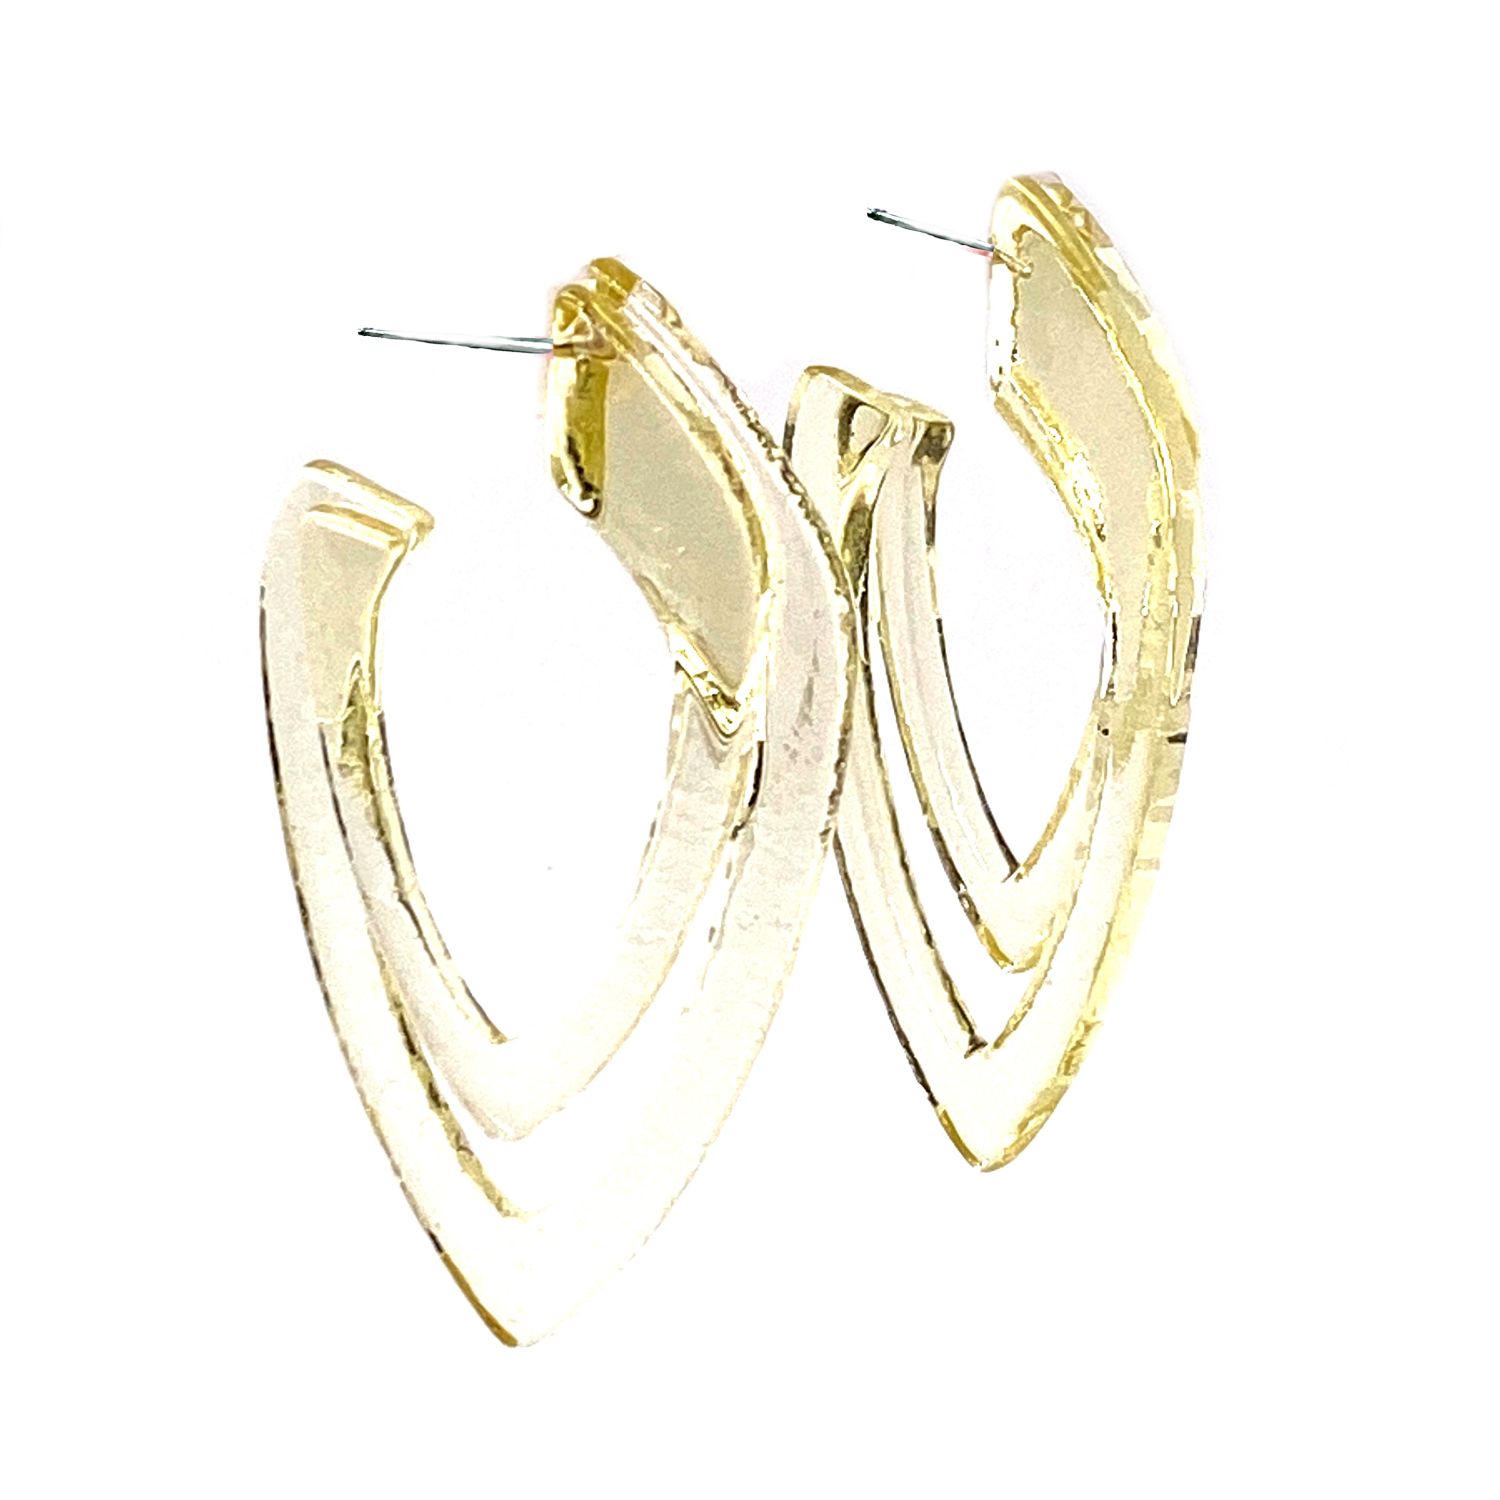 Broken Plates: Green Tea Tinted Double Open Deco Drop Earrings Product Image 1 of 1